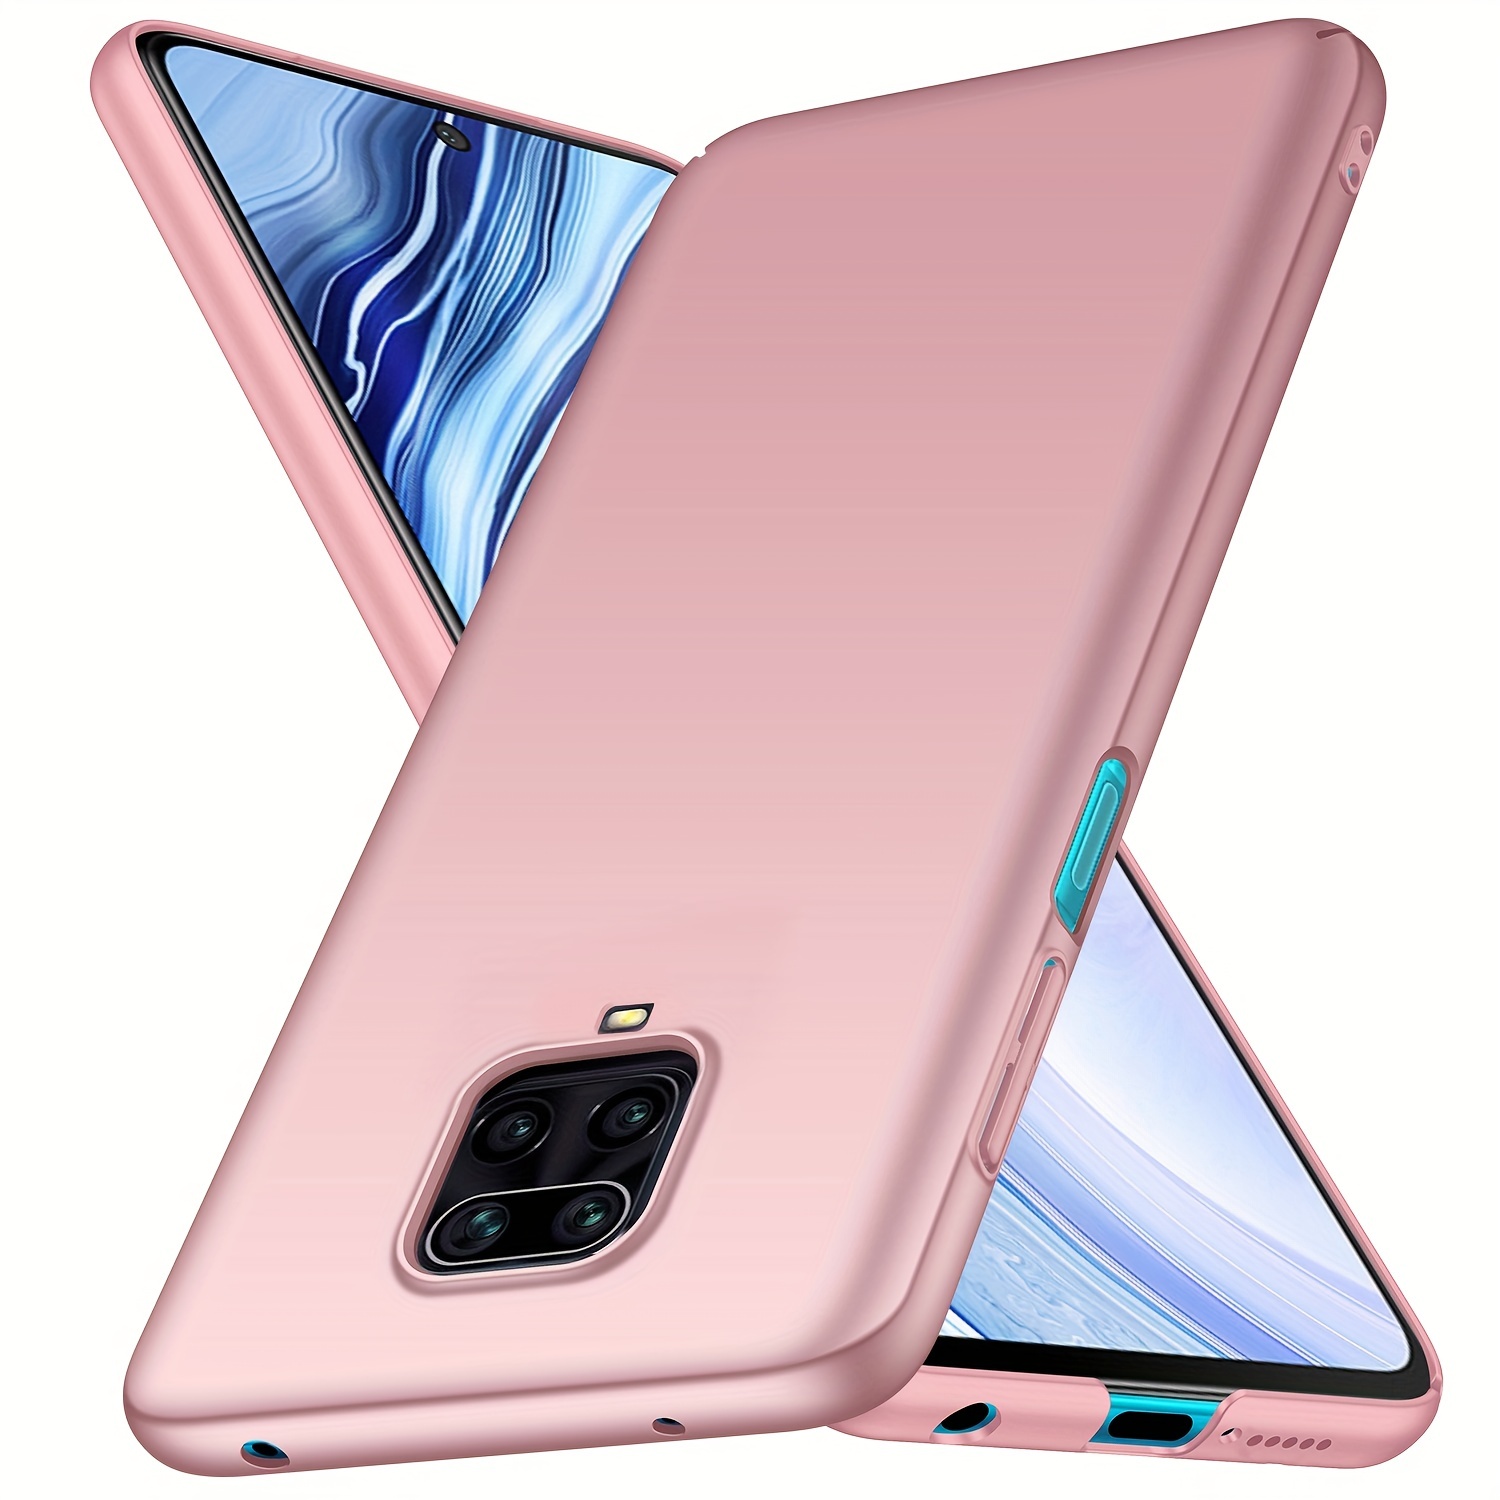  Funda para Xiaomi Redmi Note 9 Pro, Redmi Note 9s para mujer,  con purpurina, suave, elegante, transparente, TPU, de lujo, linda funda  protectora con correa de pie para Redmi Note 9s/Note